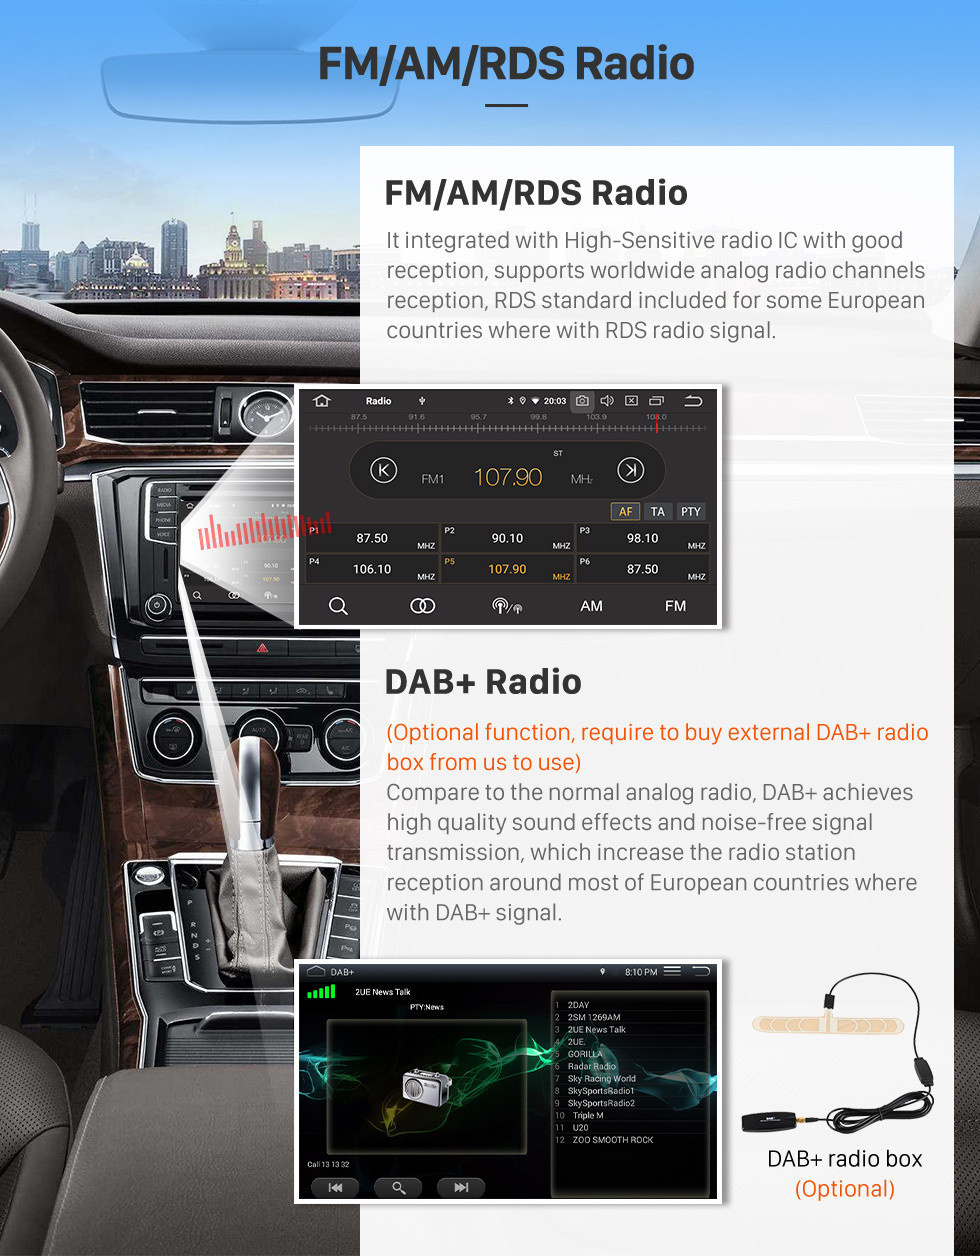 Seicane 10,1 pouces Android 11.0 Radio de navigation GPS pour 2018 Toyota Prado Bluetooth HD écran tactile AUX Carplay support caméra de recul